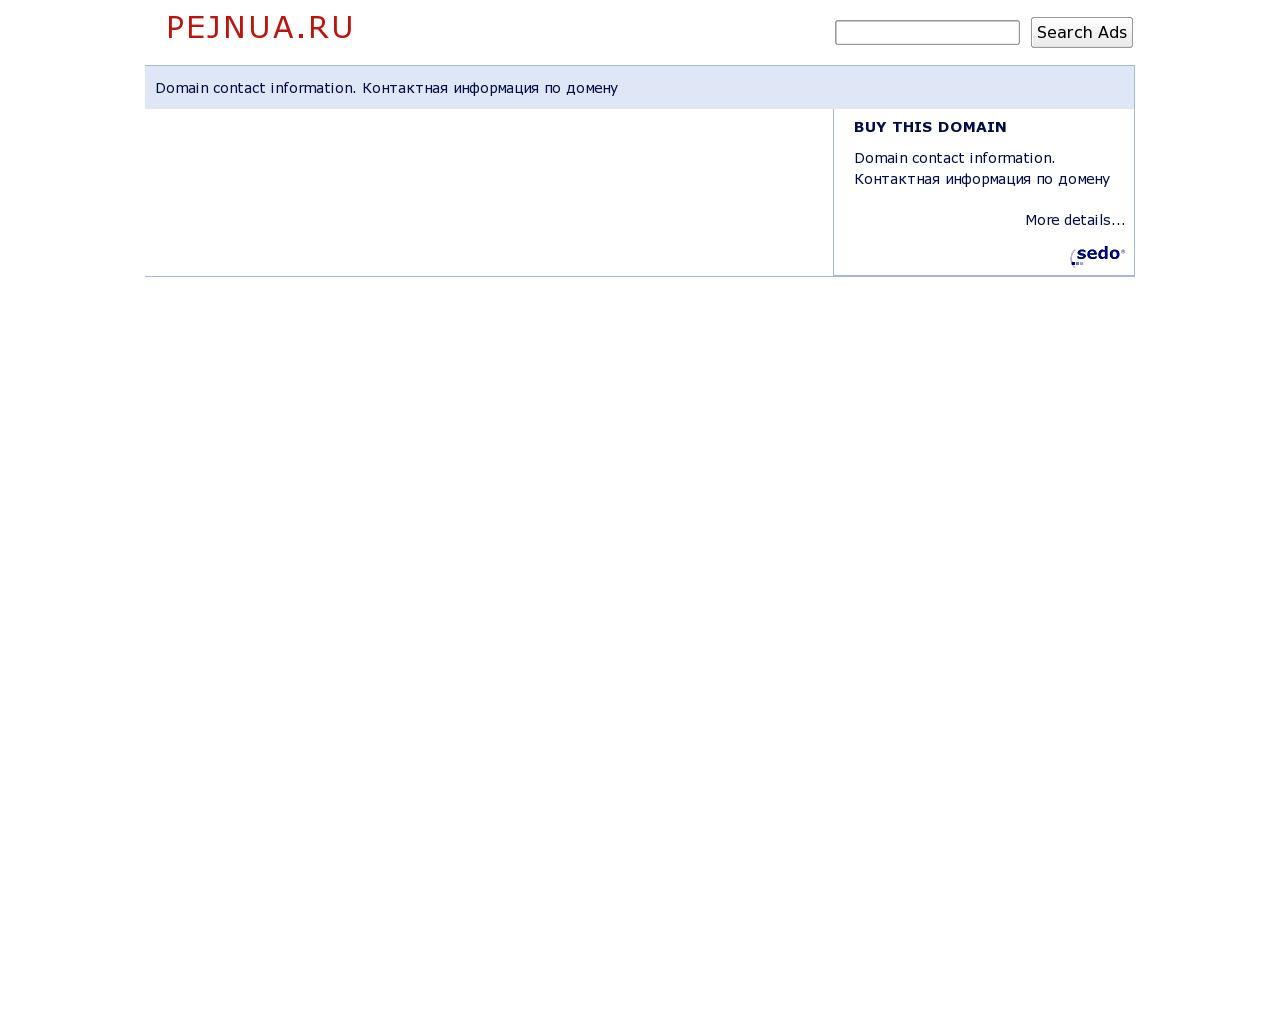 Изображение сайта pejnua.ru в разрешении 1280x1024